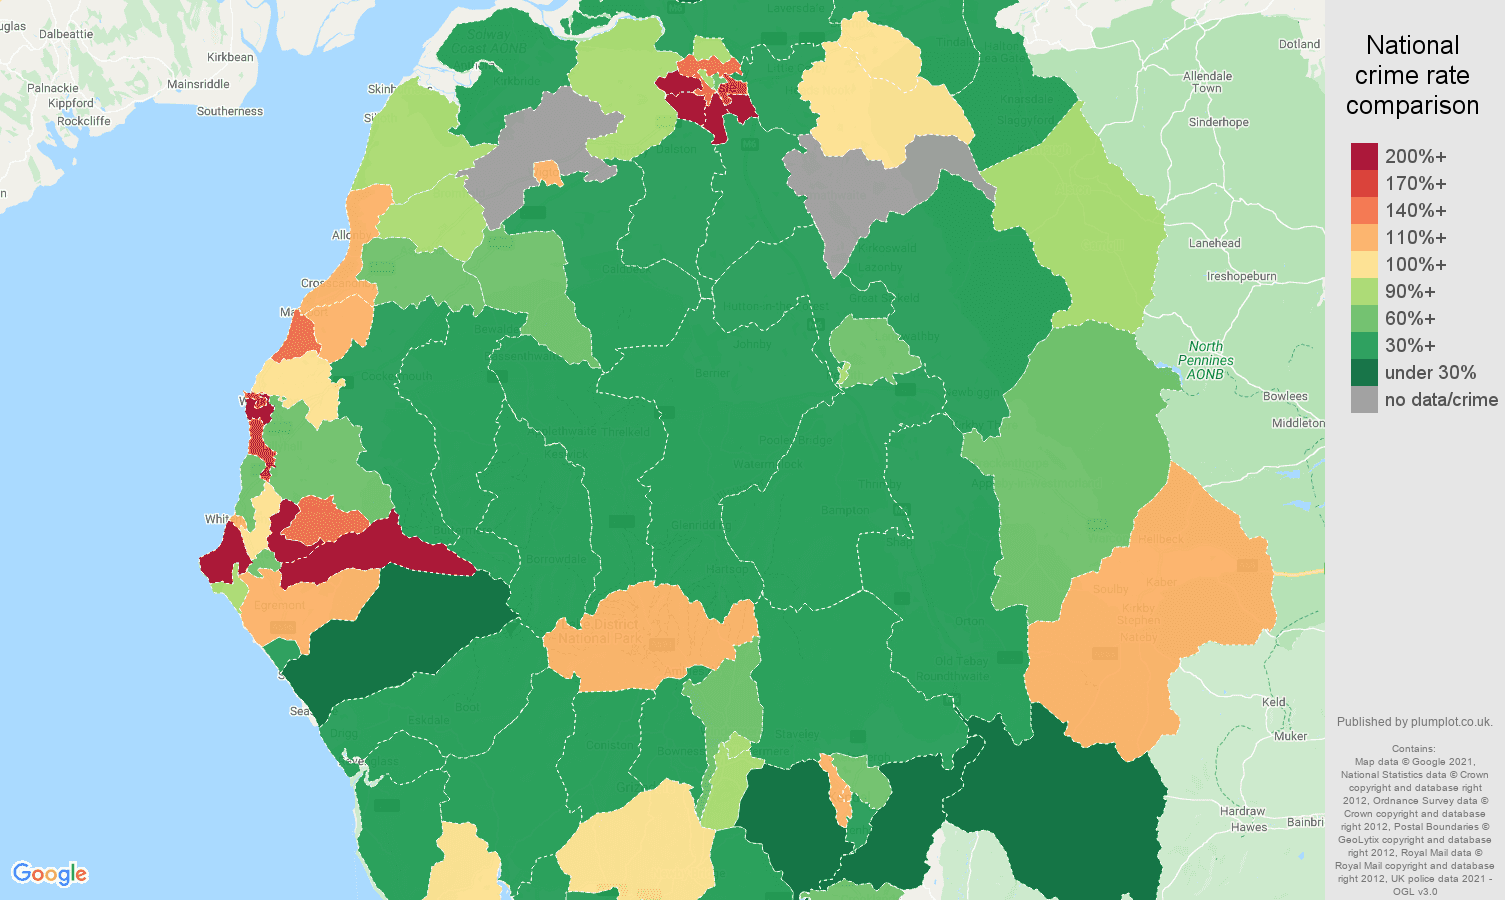 Cumbria criminal damage and arson crime rate comparison map